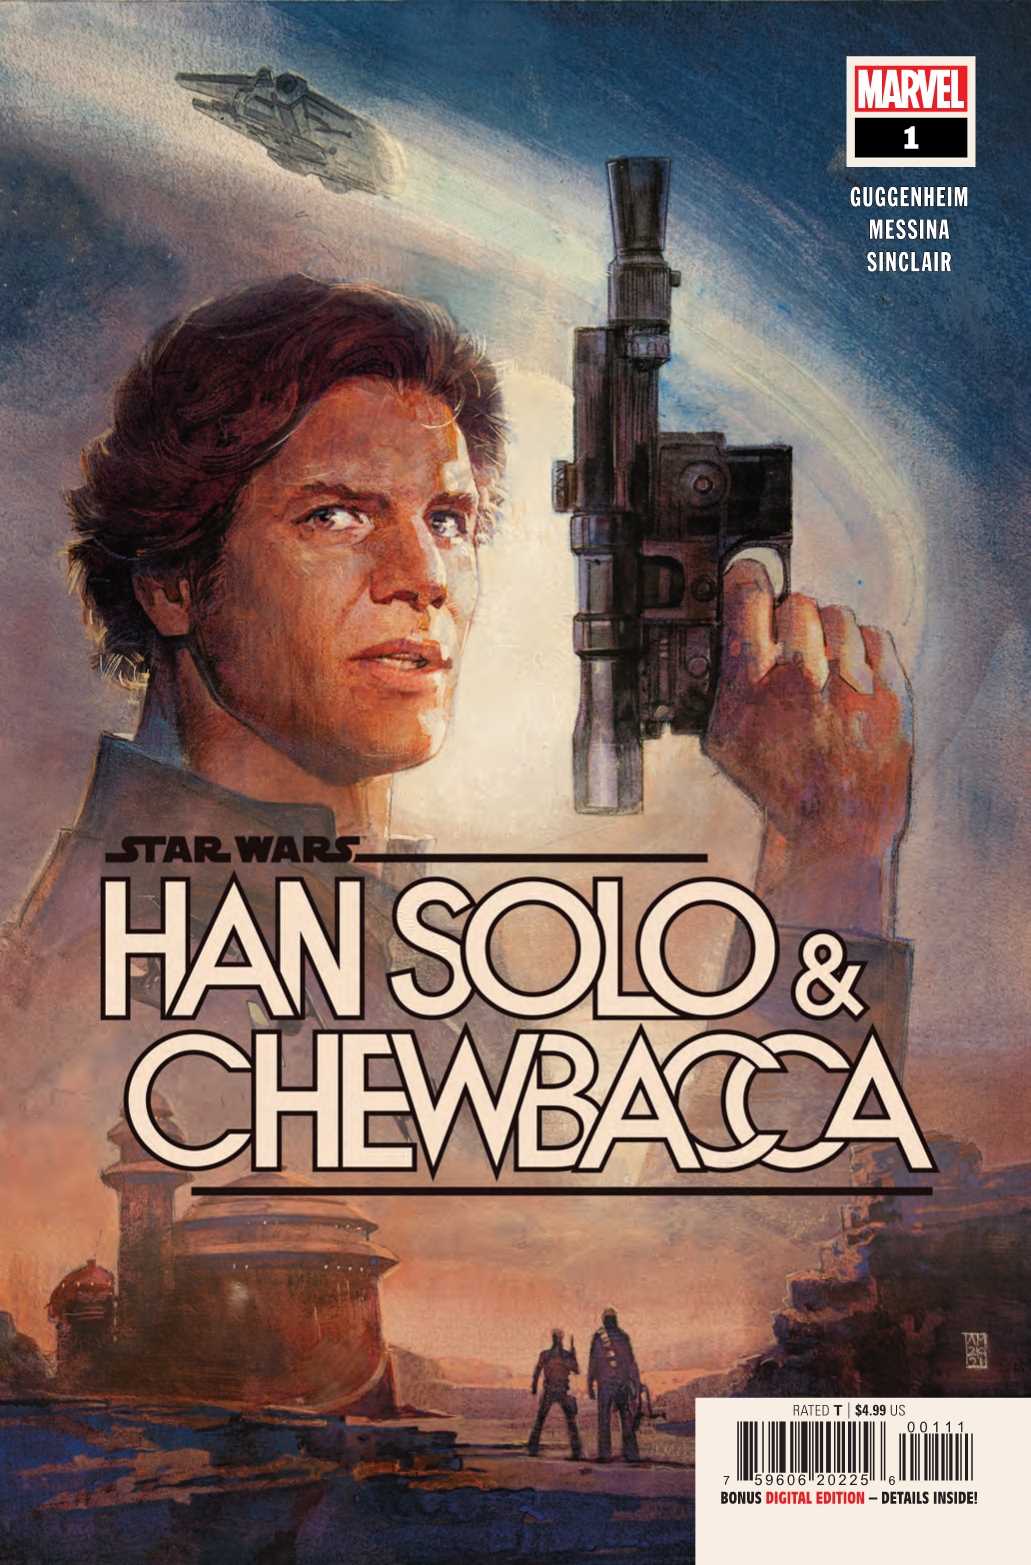 Han Solo & Chewbacca #1